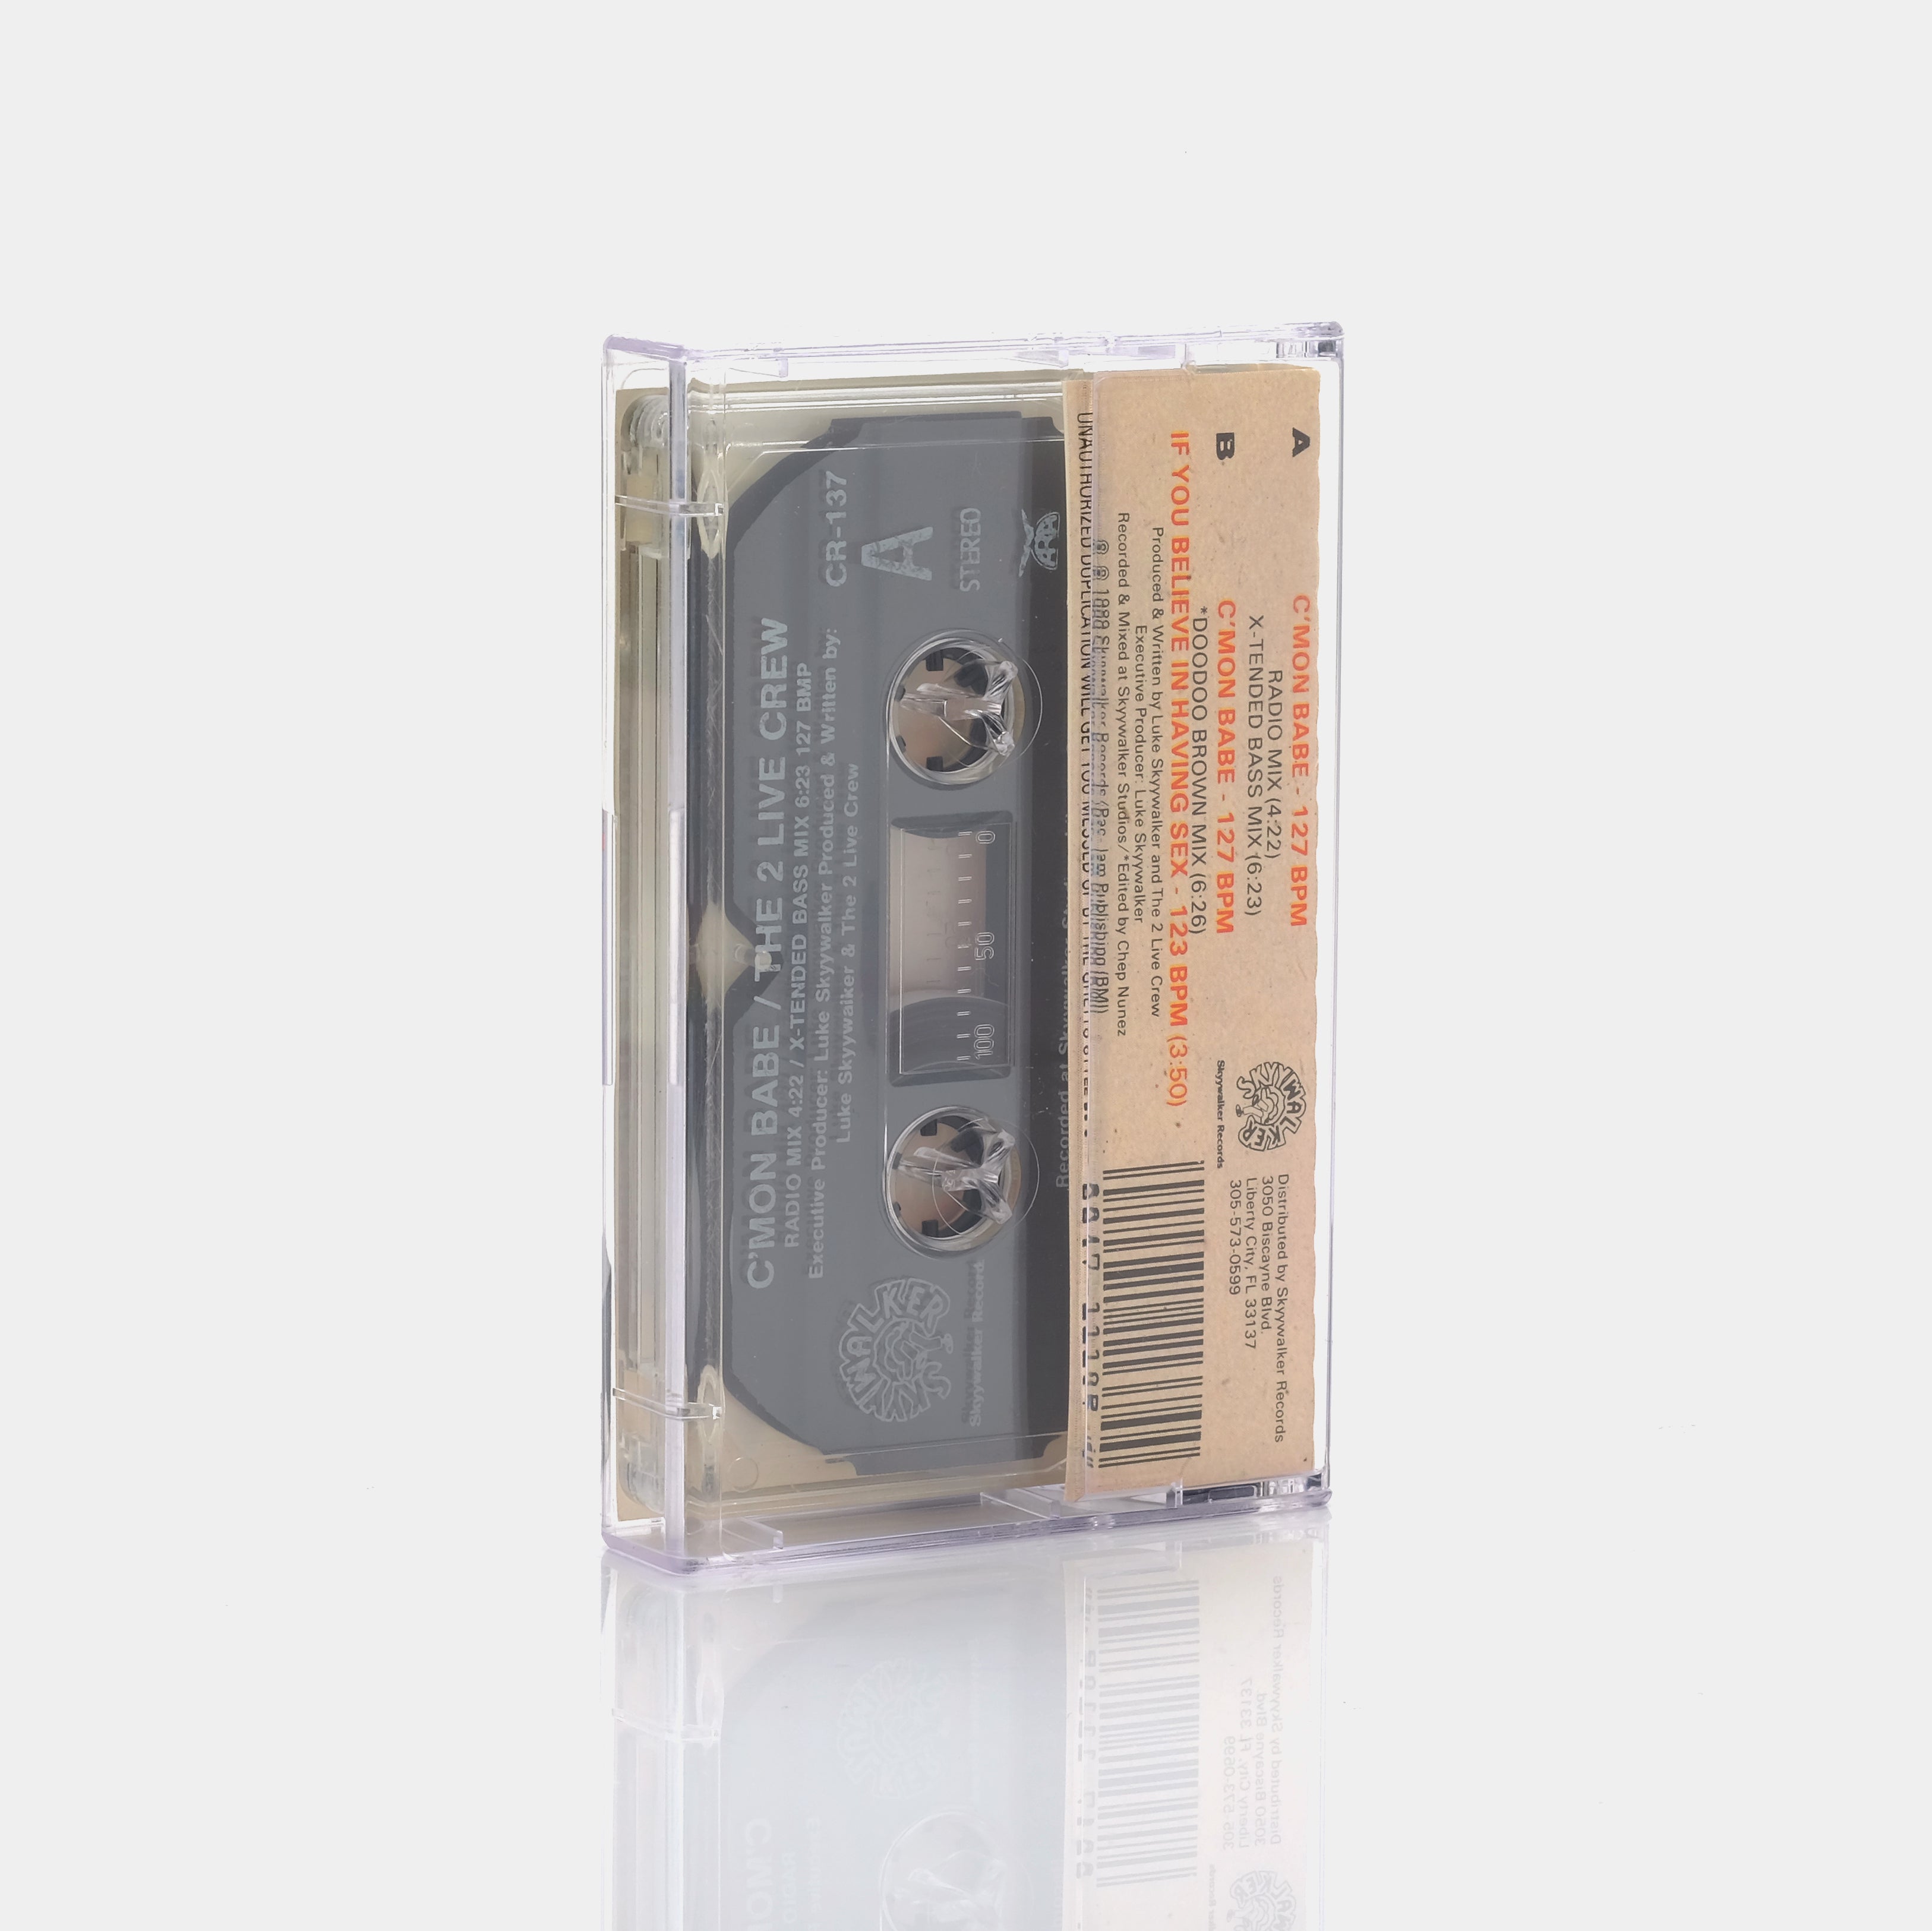 The 2 Live Crew - C'mon Babe Cassette Tape